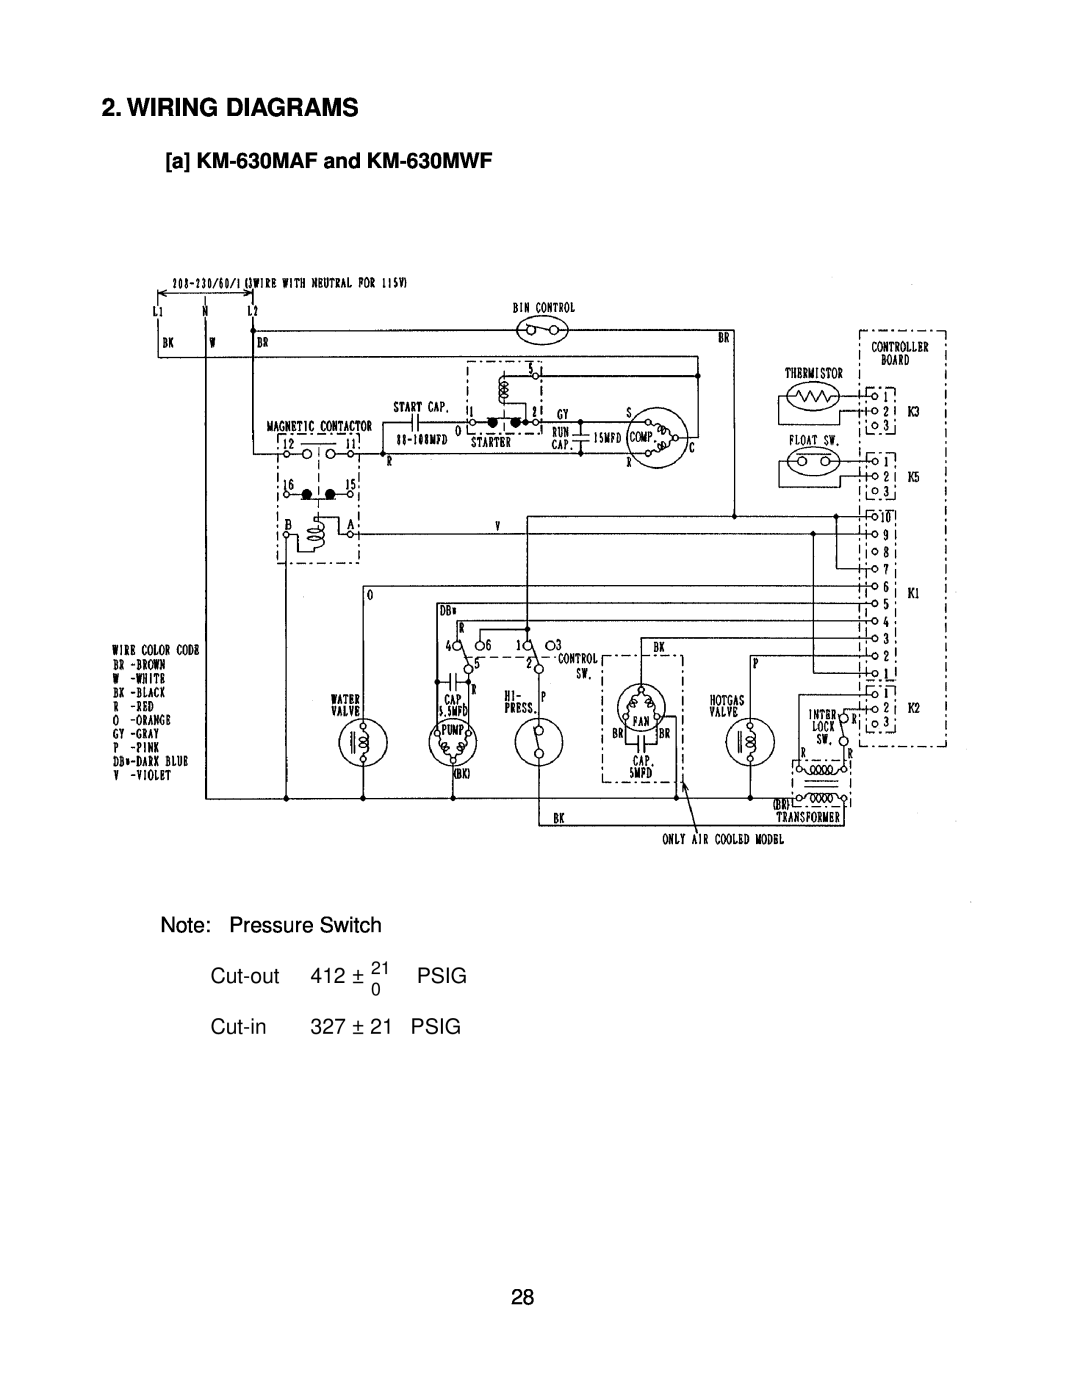 Hoshizaki KM-630MRF service manual Wiring Diagrams, a KM-630MAF and KM-630MWF 